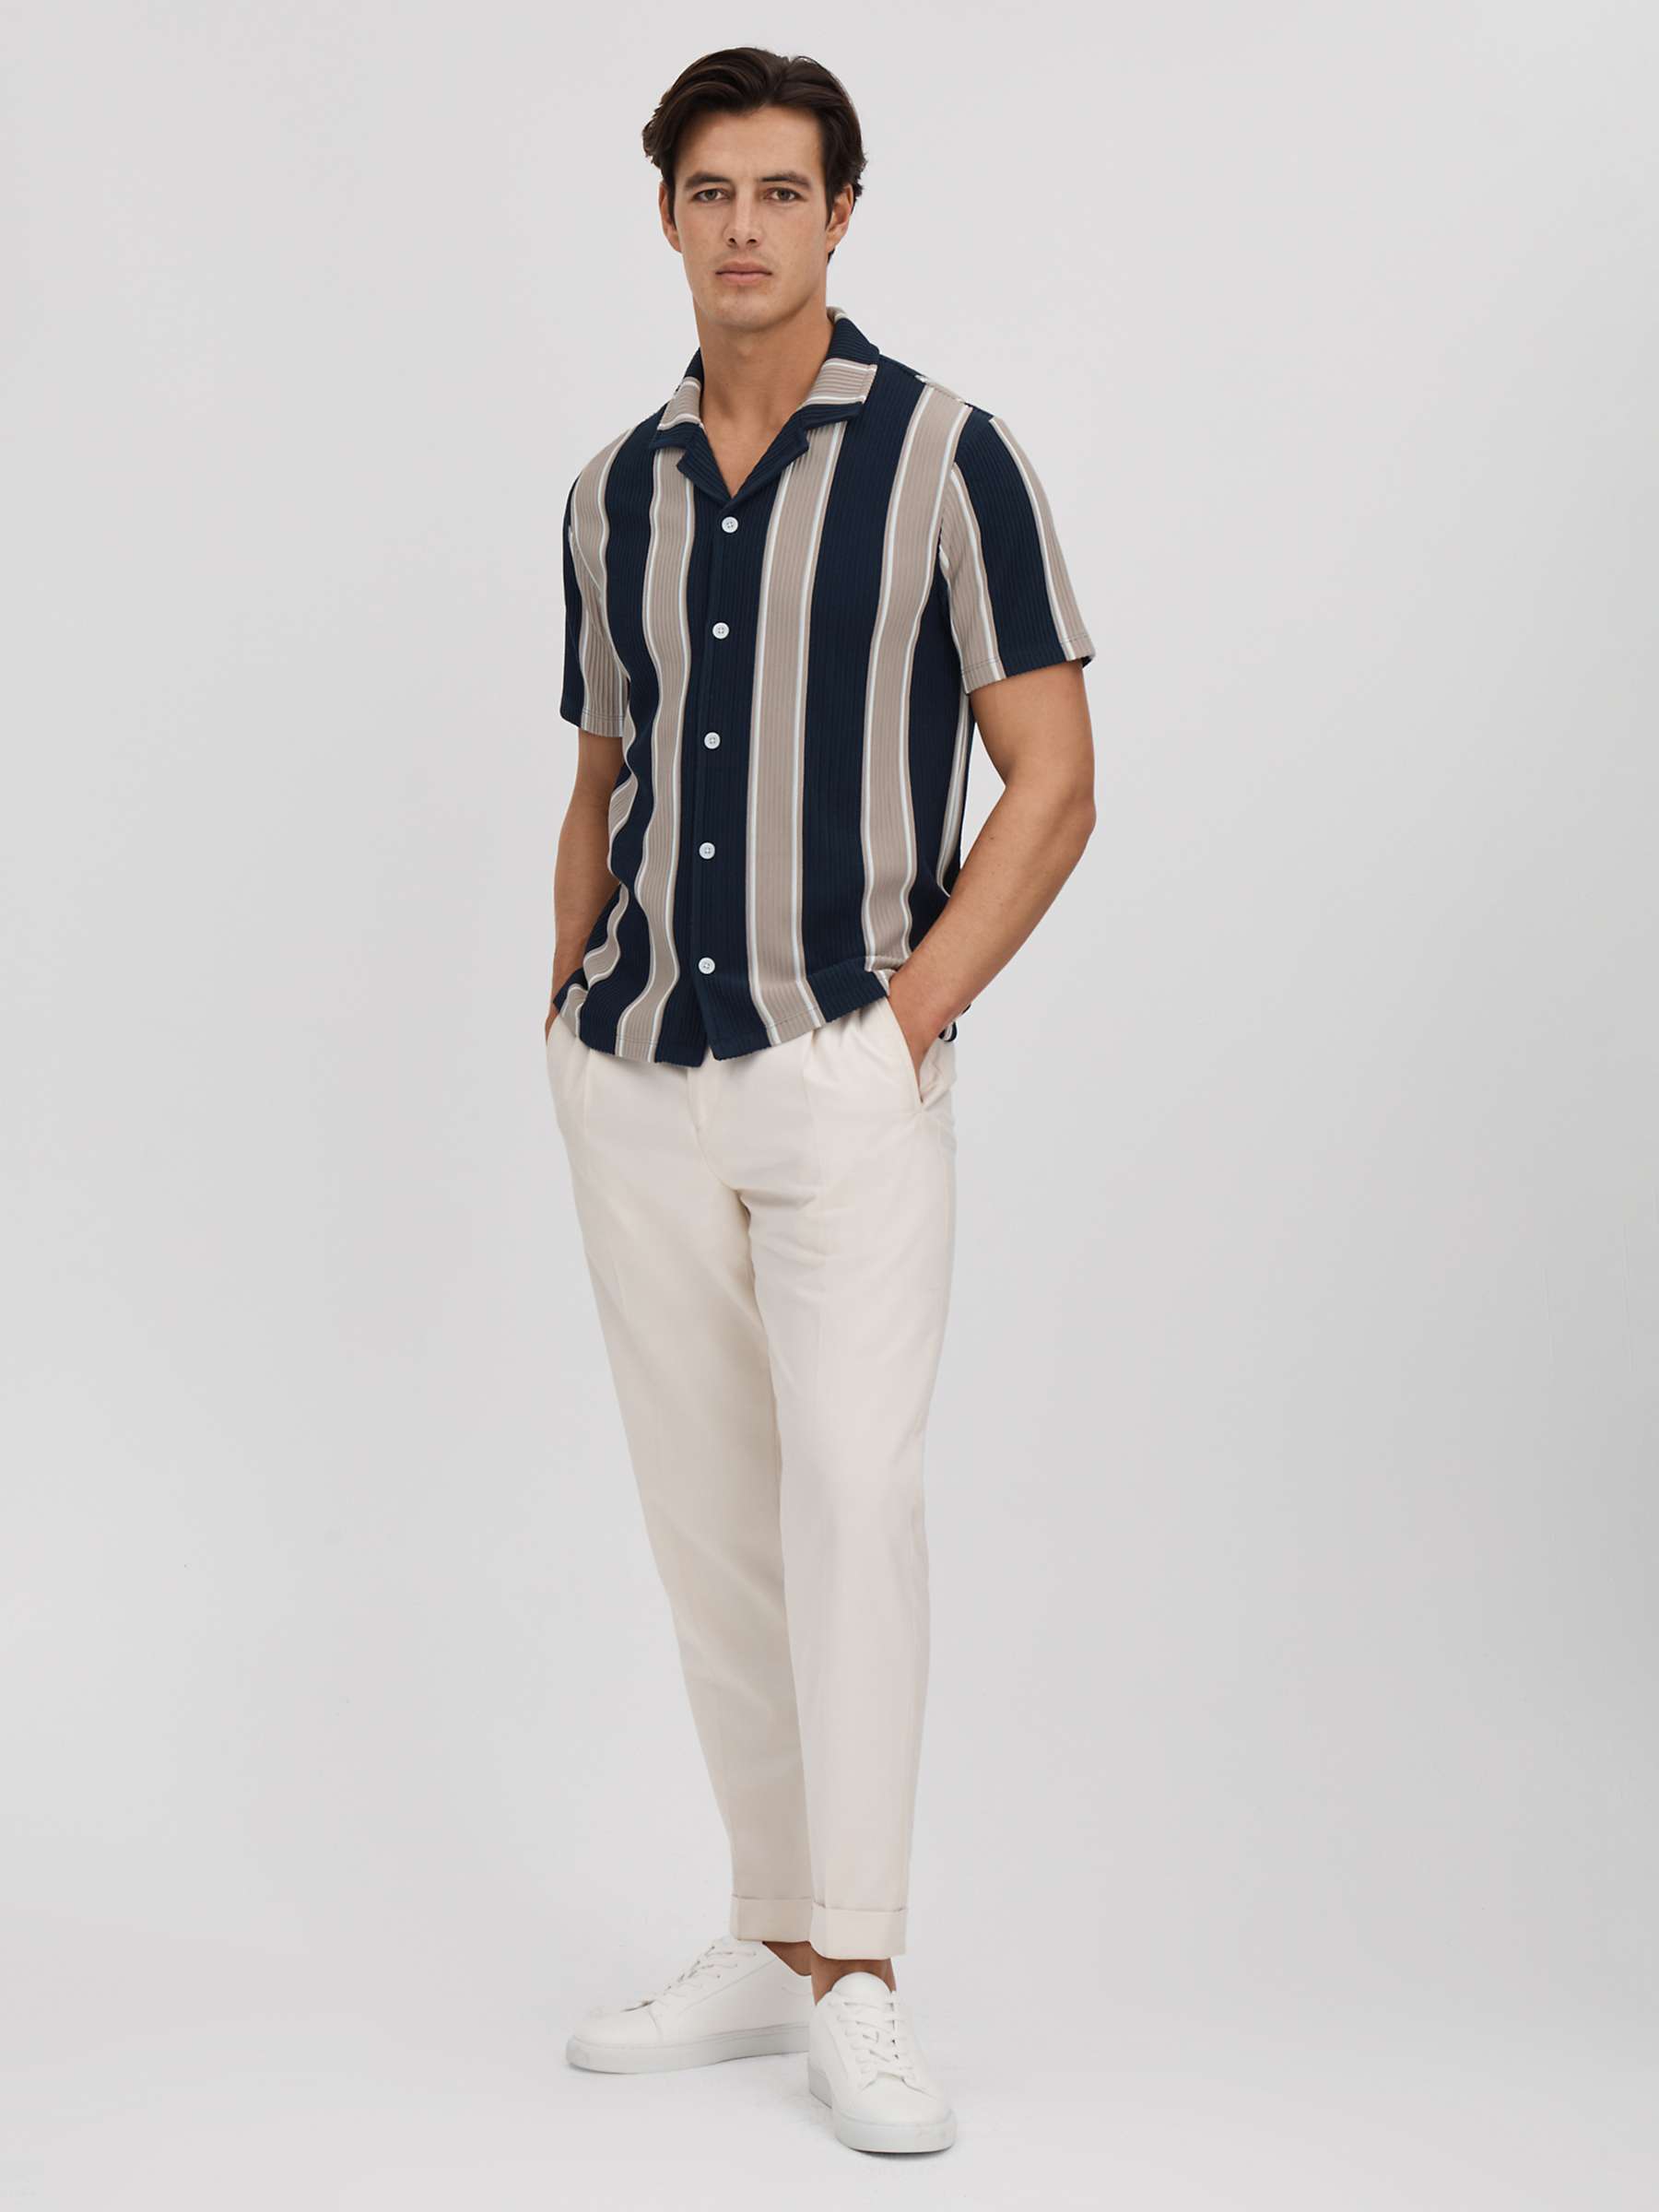 Buy Reiss Alton Short Sleeve Textured Stripe Shirt, Navy/Camel Online at johnlewis.com